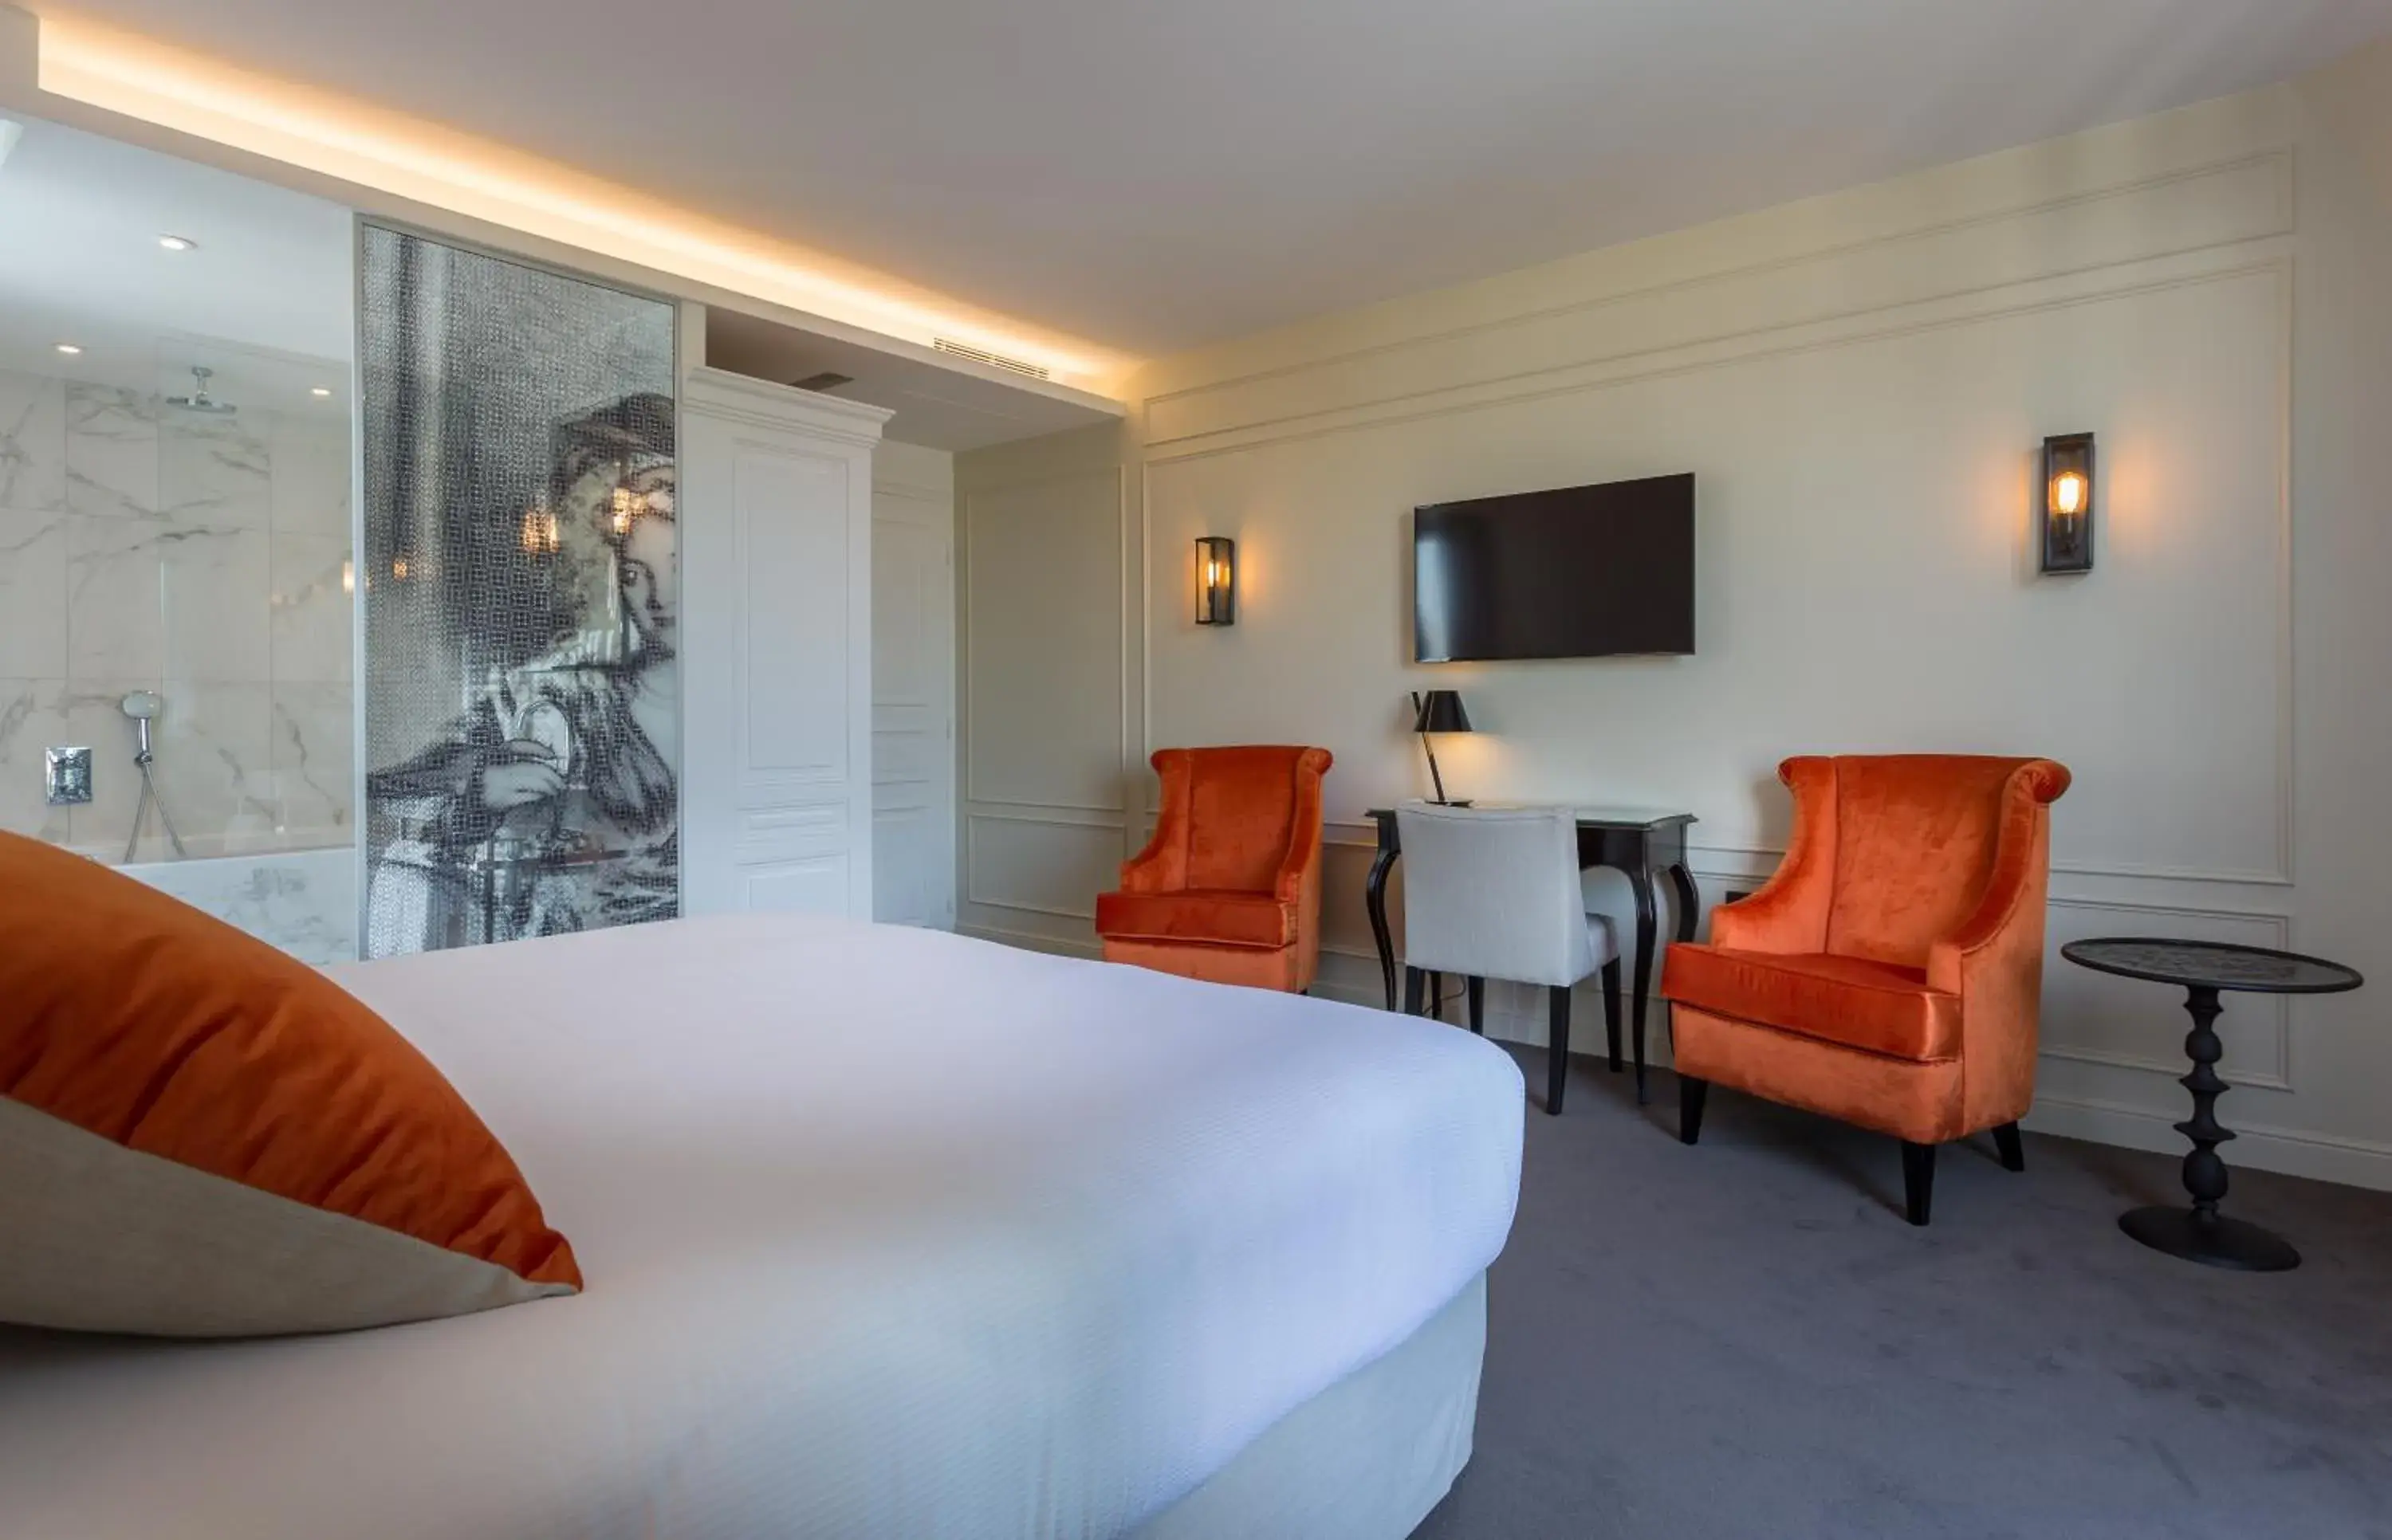 Bed, Room Photo in Hotel La Comtesse